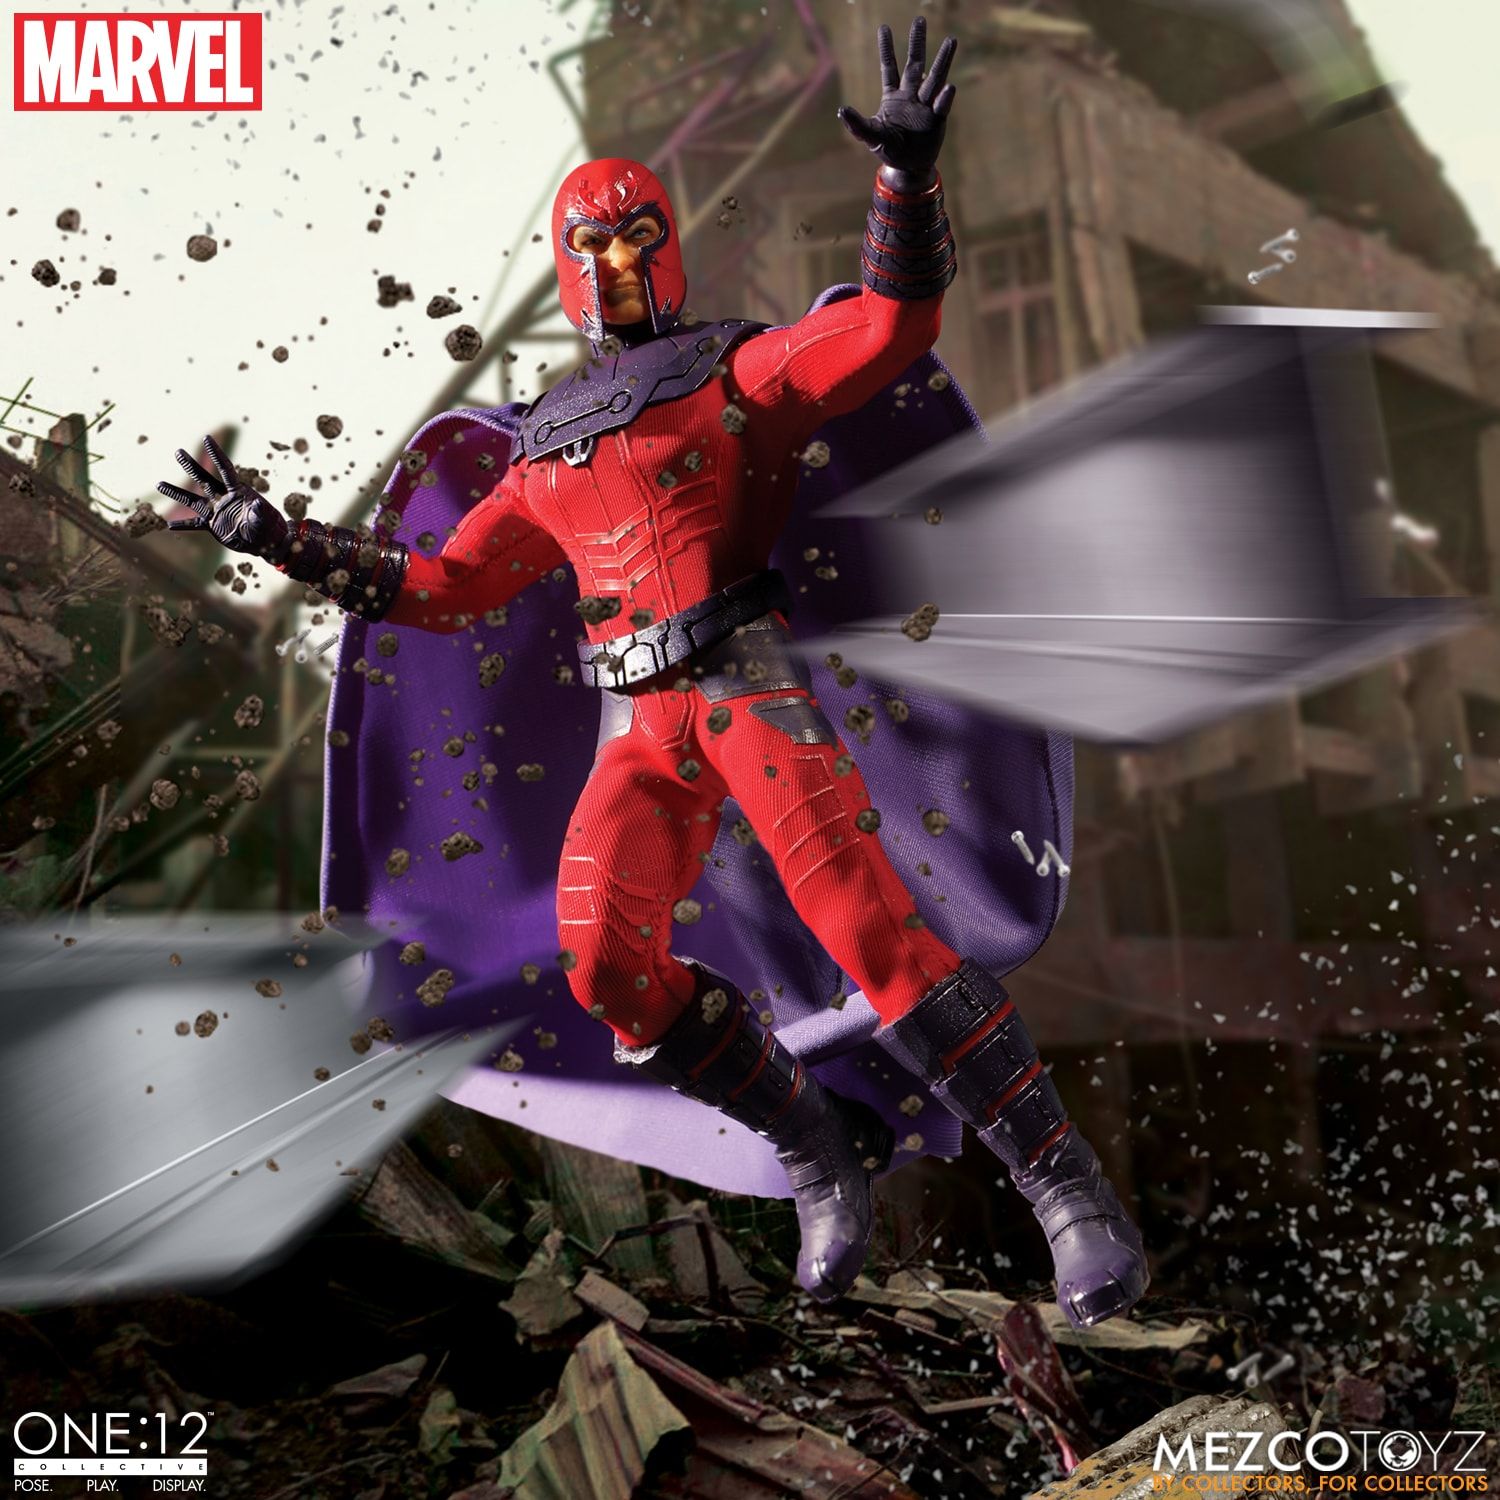 Mezco ONE:12 Collective Magneto Figure Photos & Order Info! - Marvel